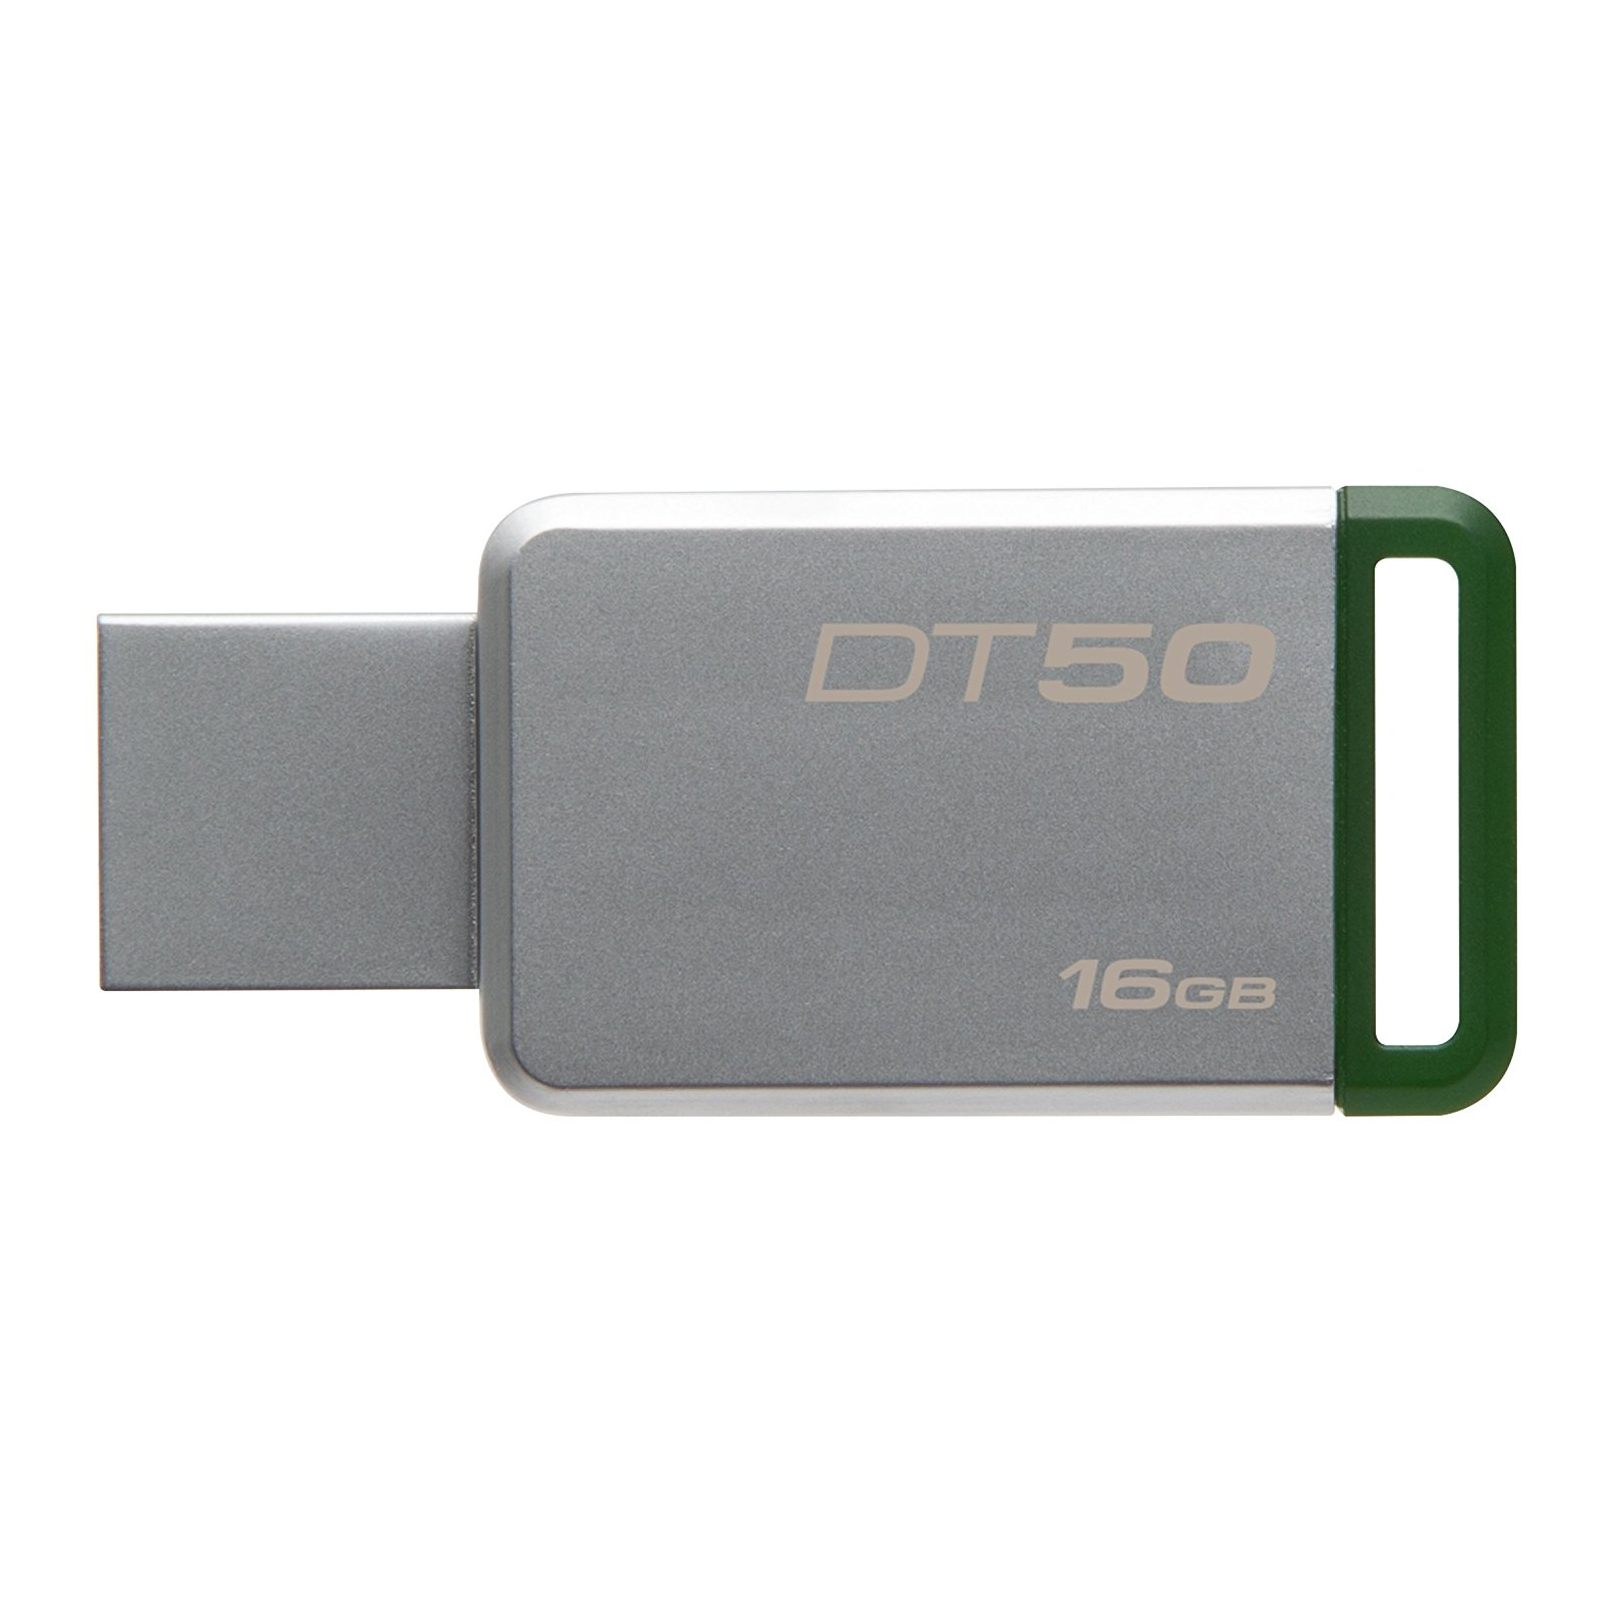 USB флеш накопитель Kingston 32GB DT50 USB 3.1 (DT50/32GB)